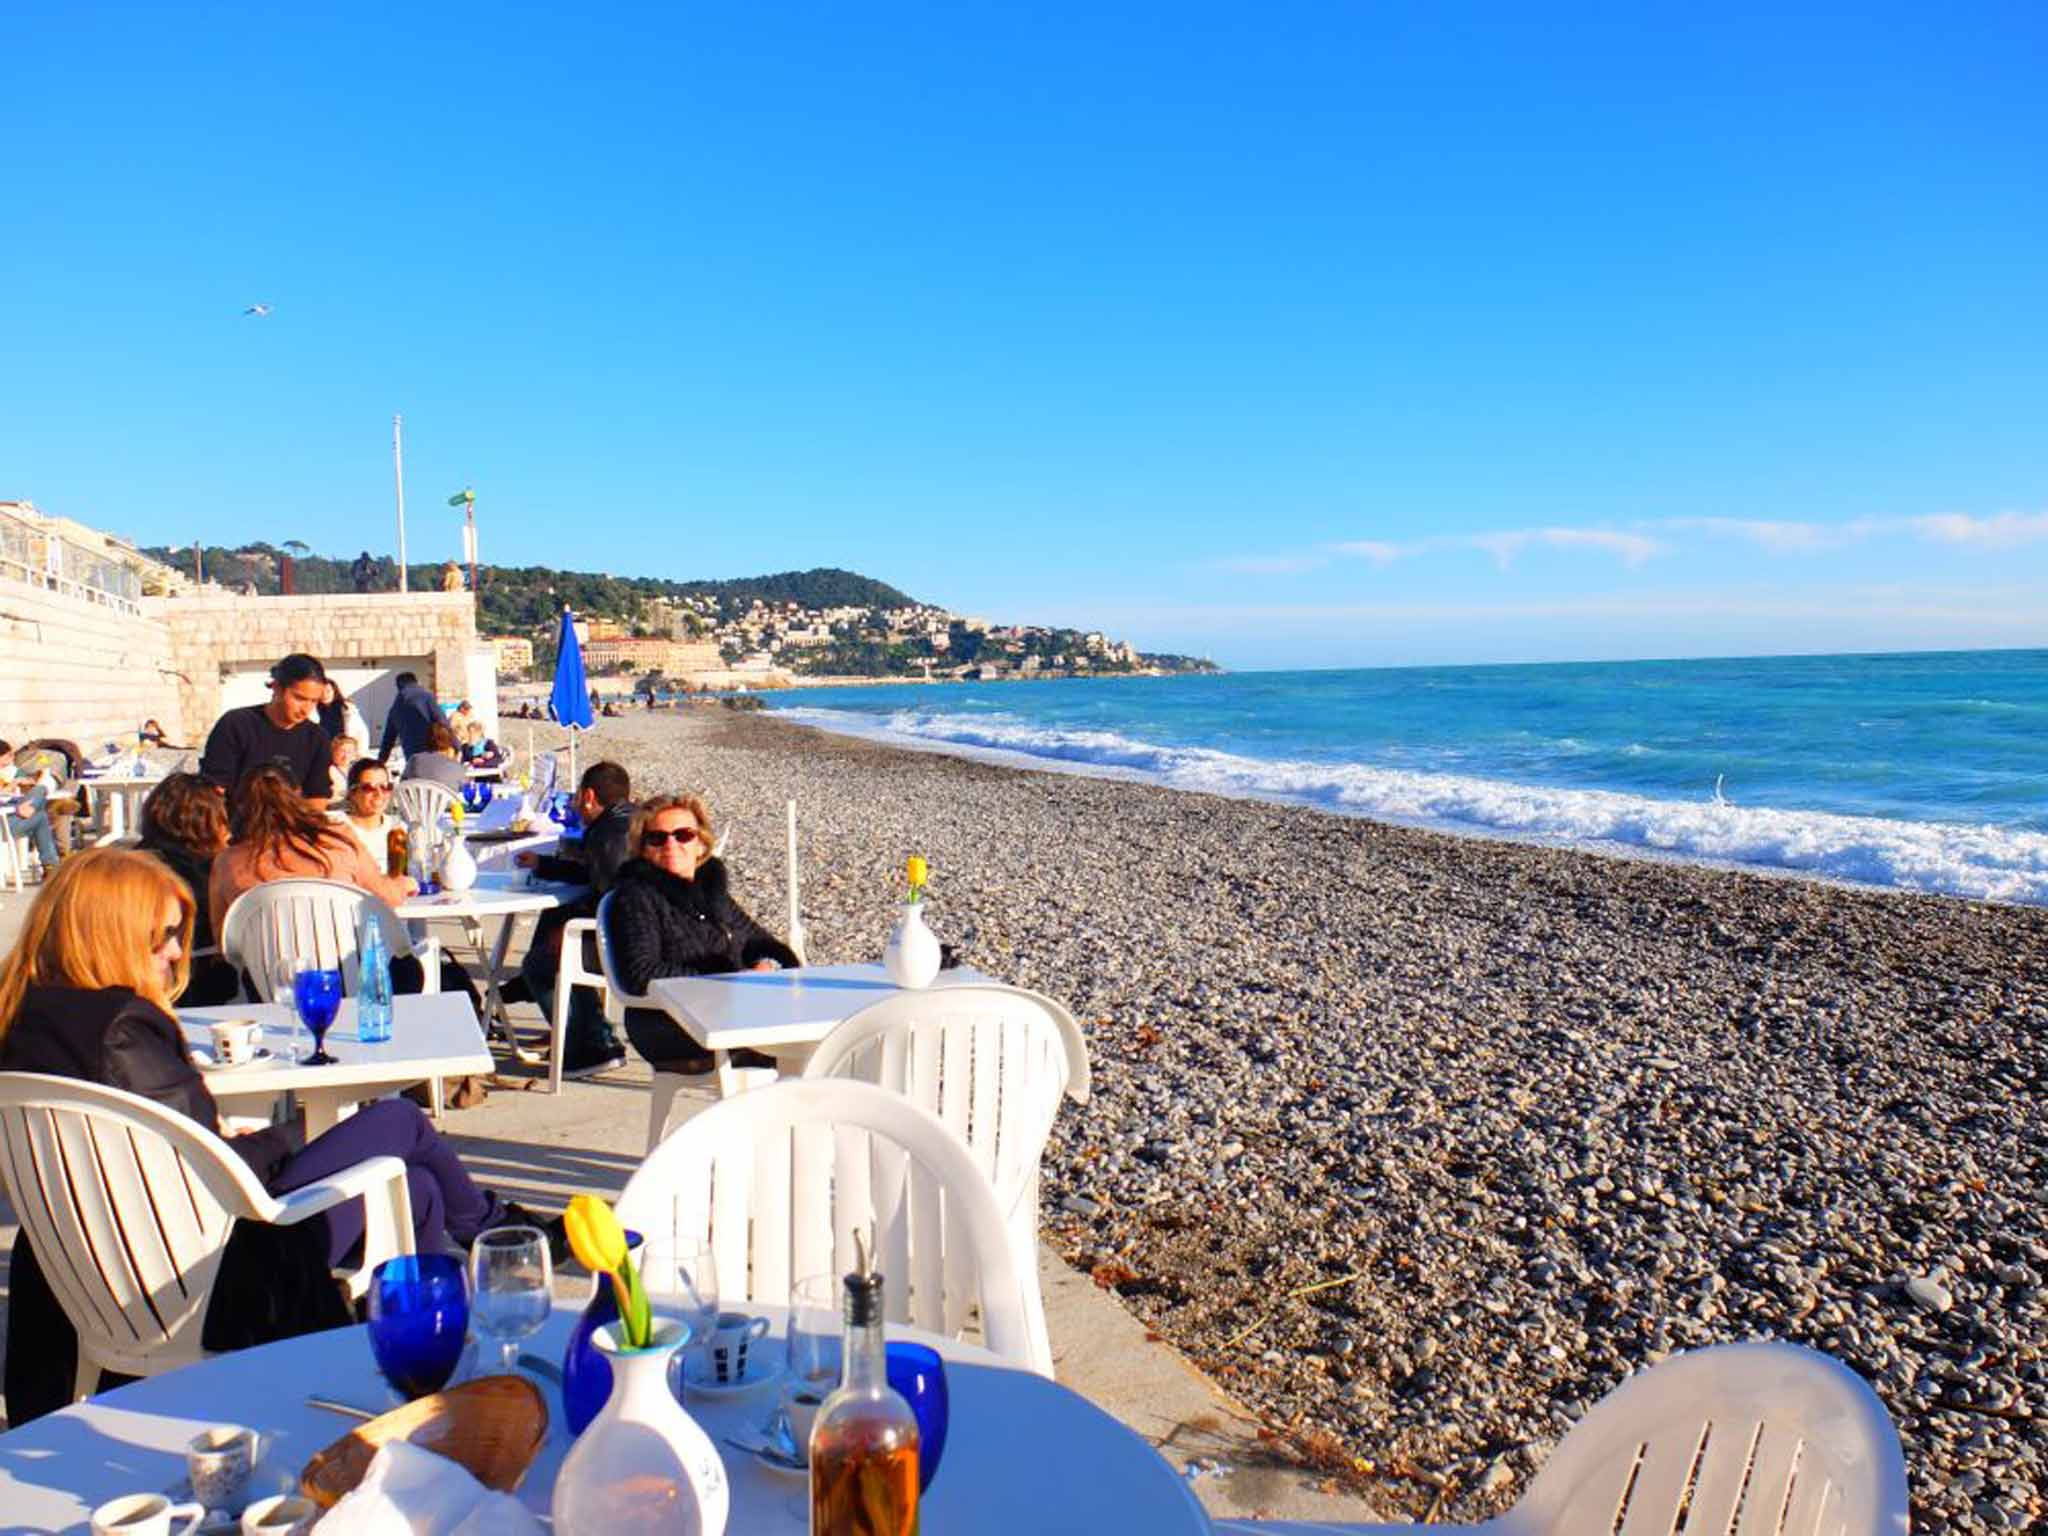 Time for Med: Galion beach restaurant